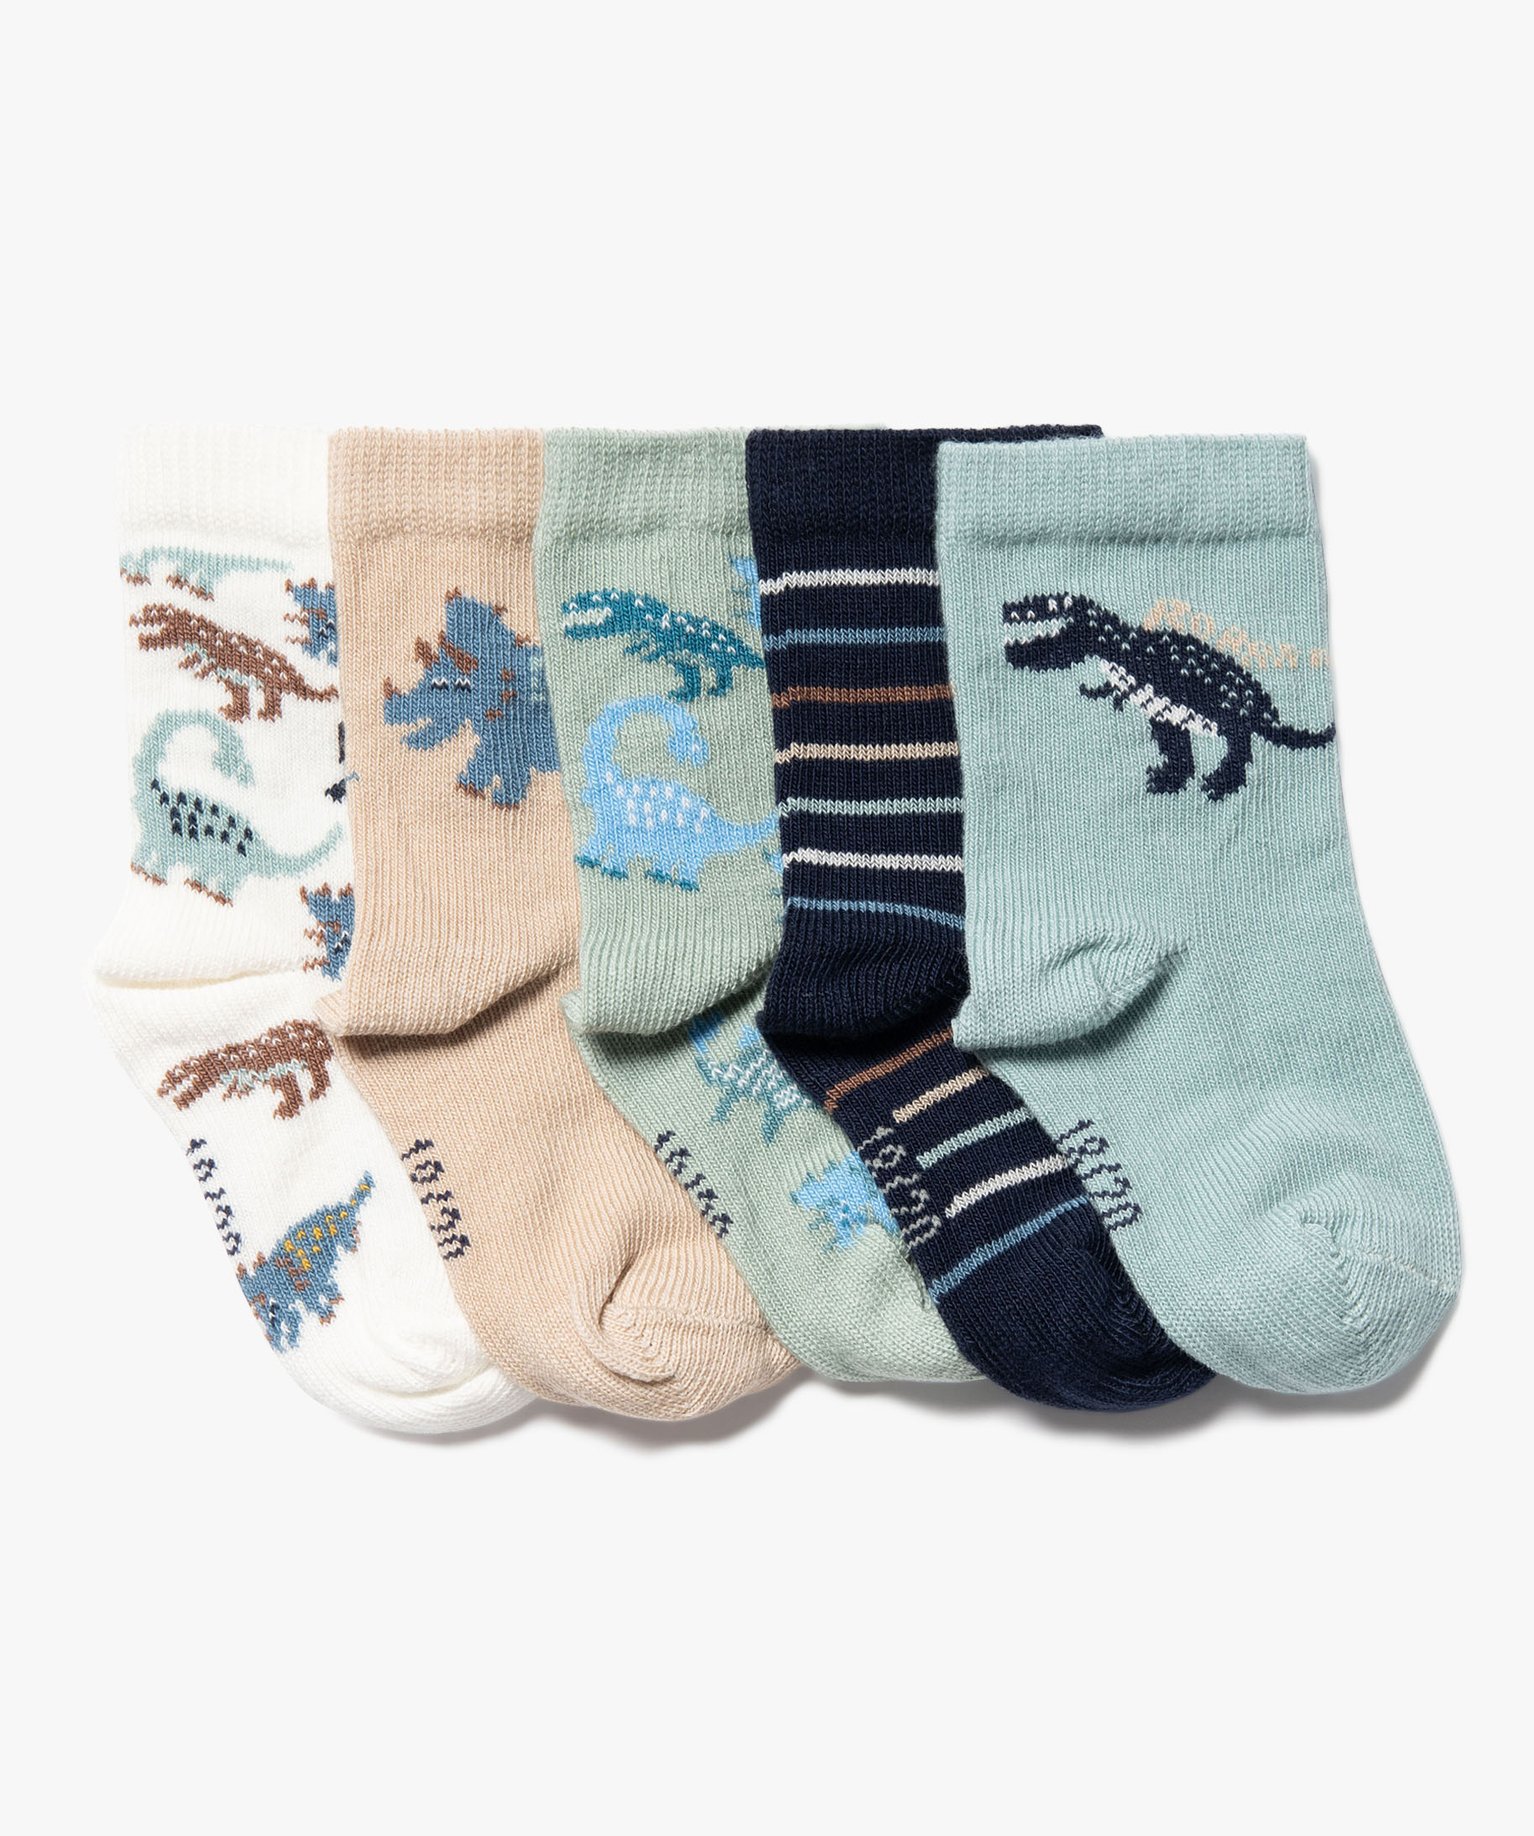 Chaussettes à motifs dinosaures bébé (lot de 5) - 15/17 - bleu standard - GEMO